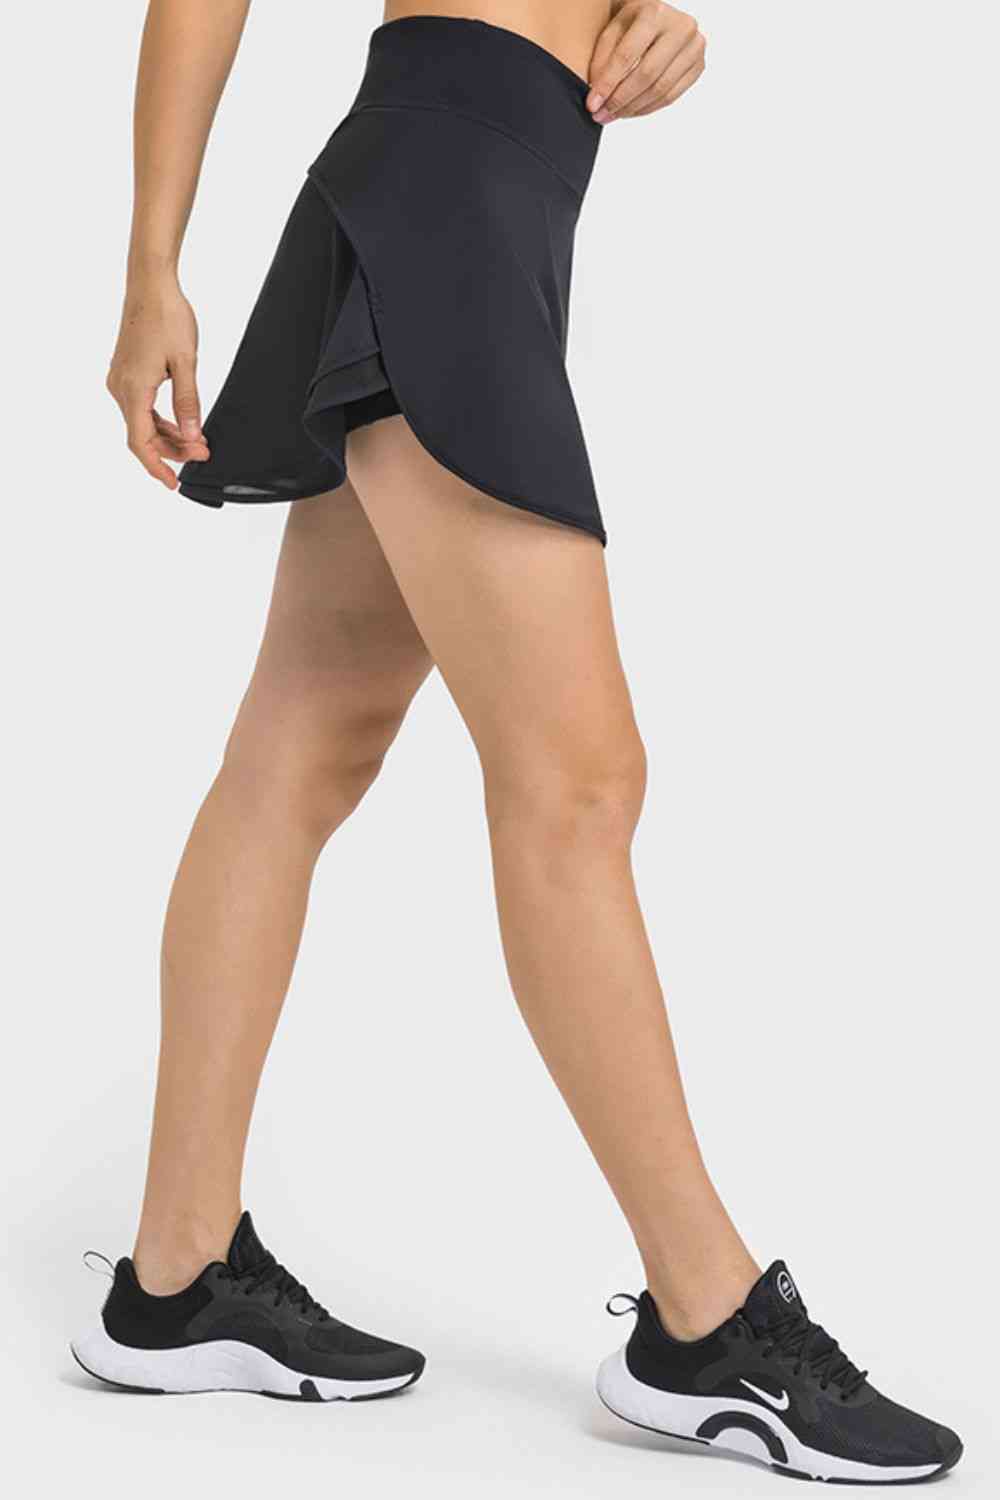 Falda pantalón deportiva con cintura ancha